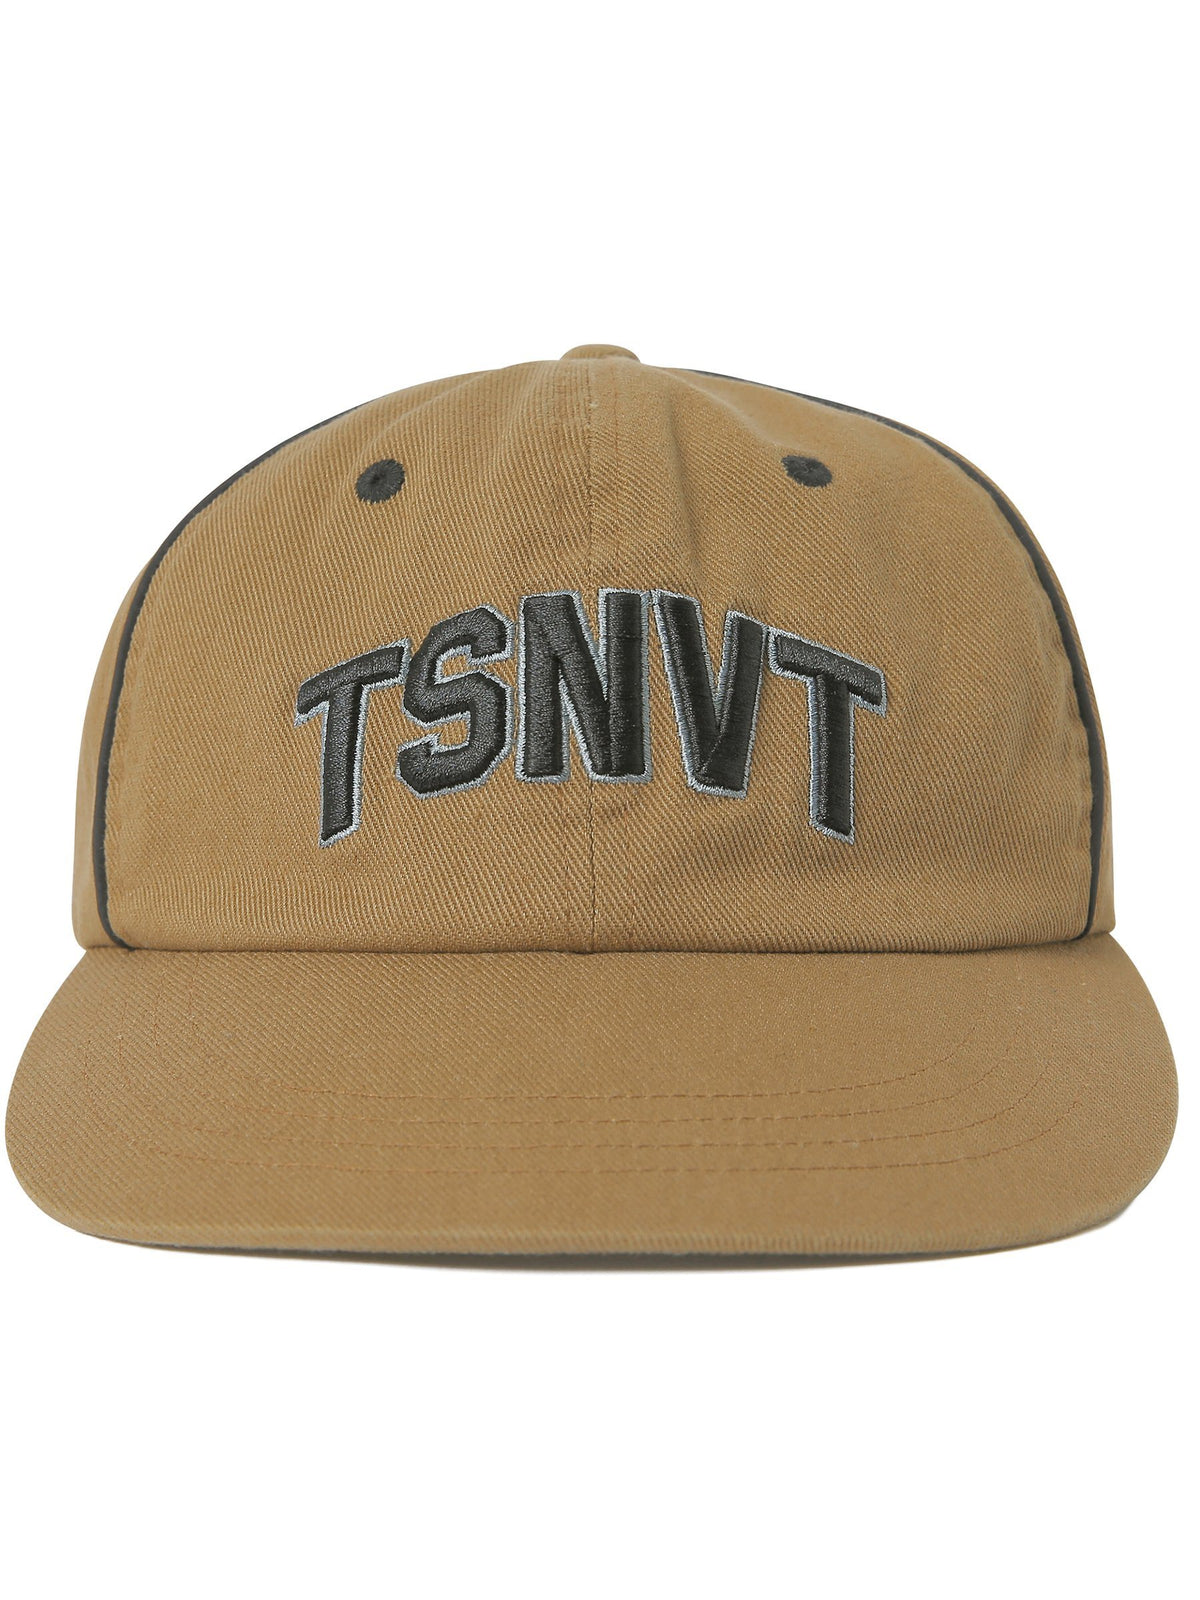 TSNVT Piping Cap Headwear 